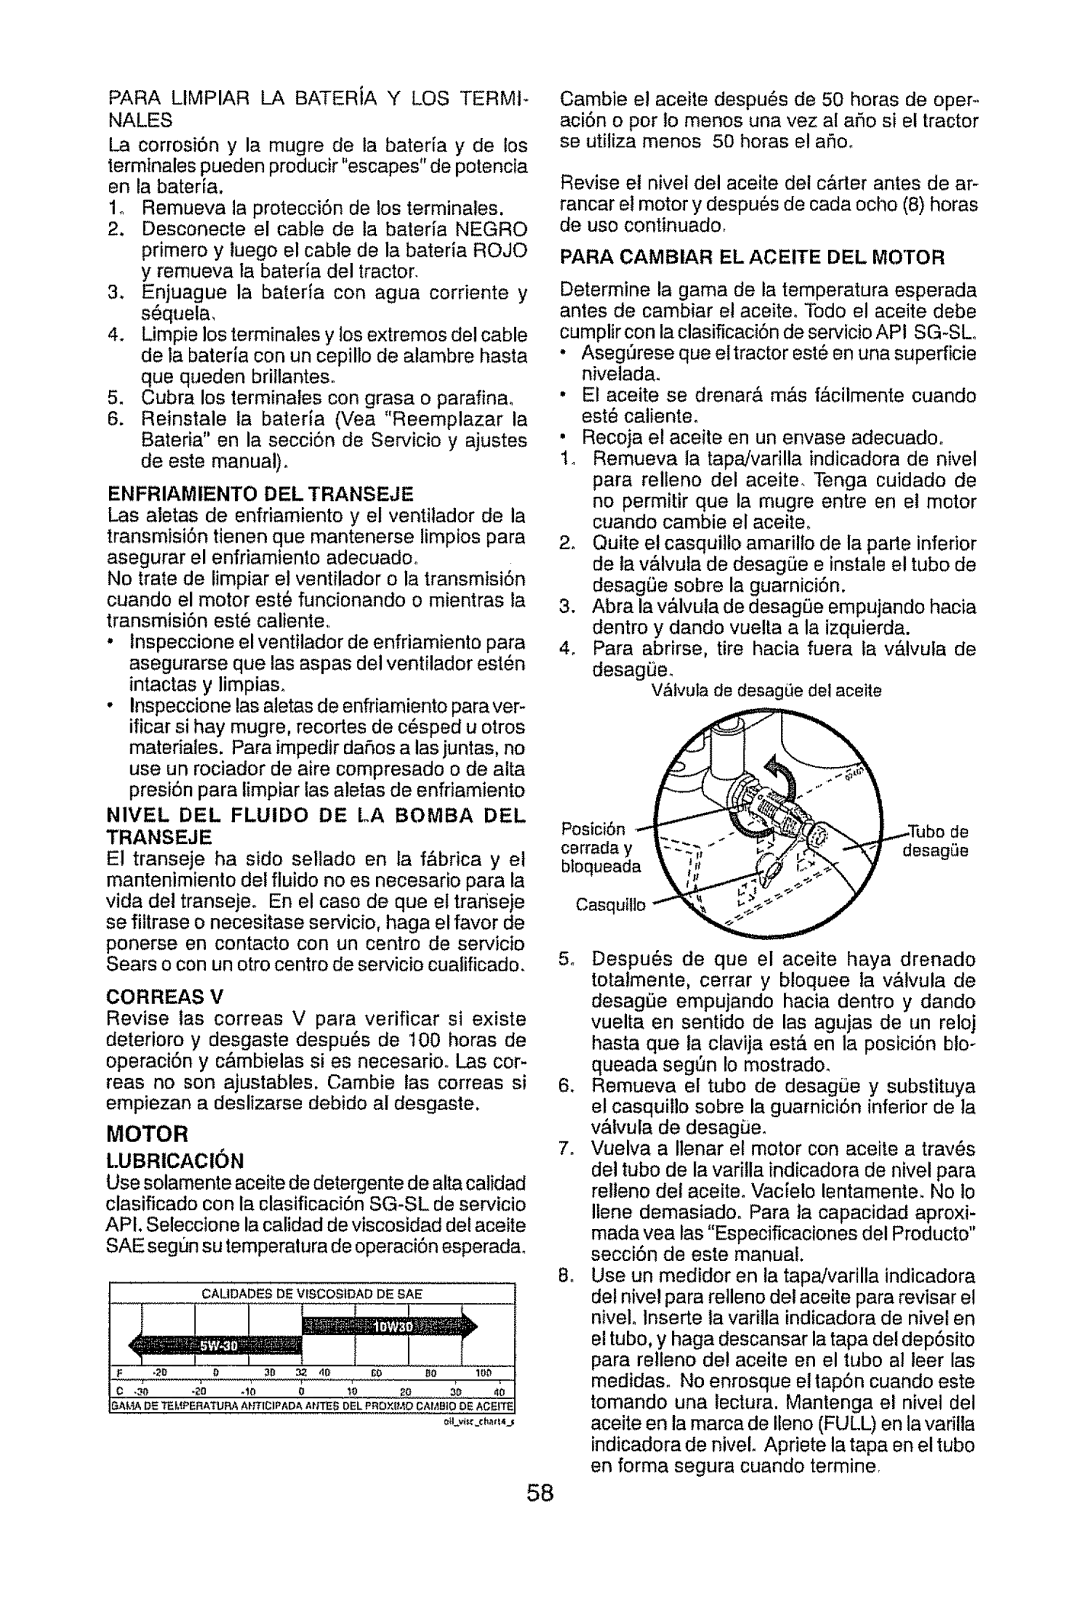 Craftsman 917.289470 manual Nivel Del Fluido De La Bomba Del Transeje, Motor 